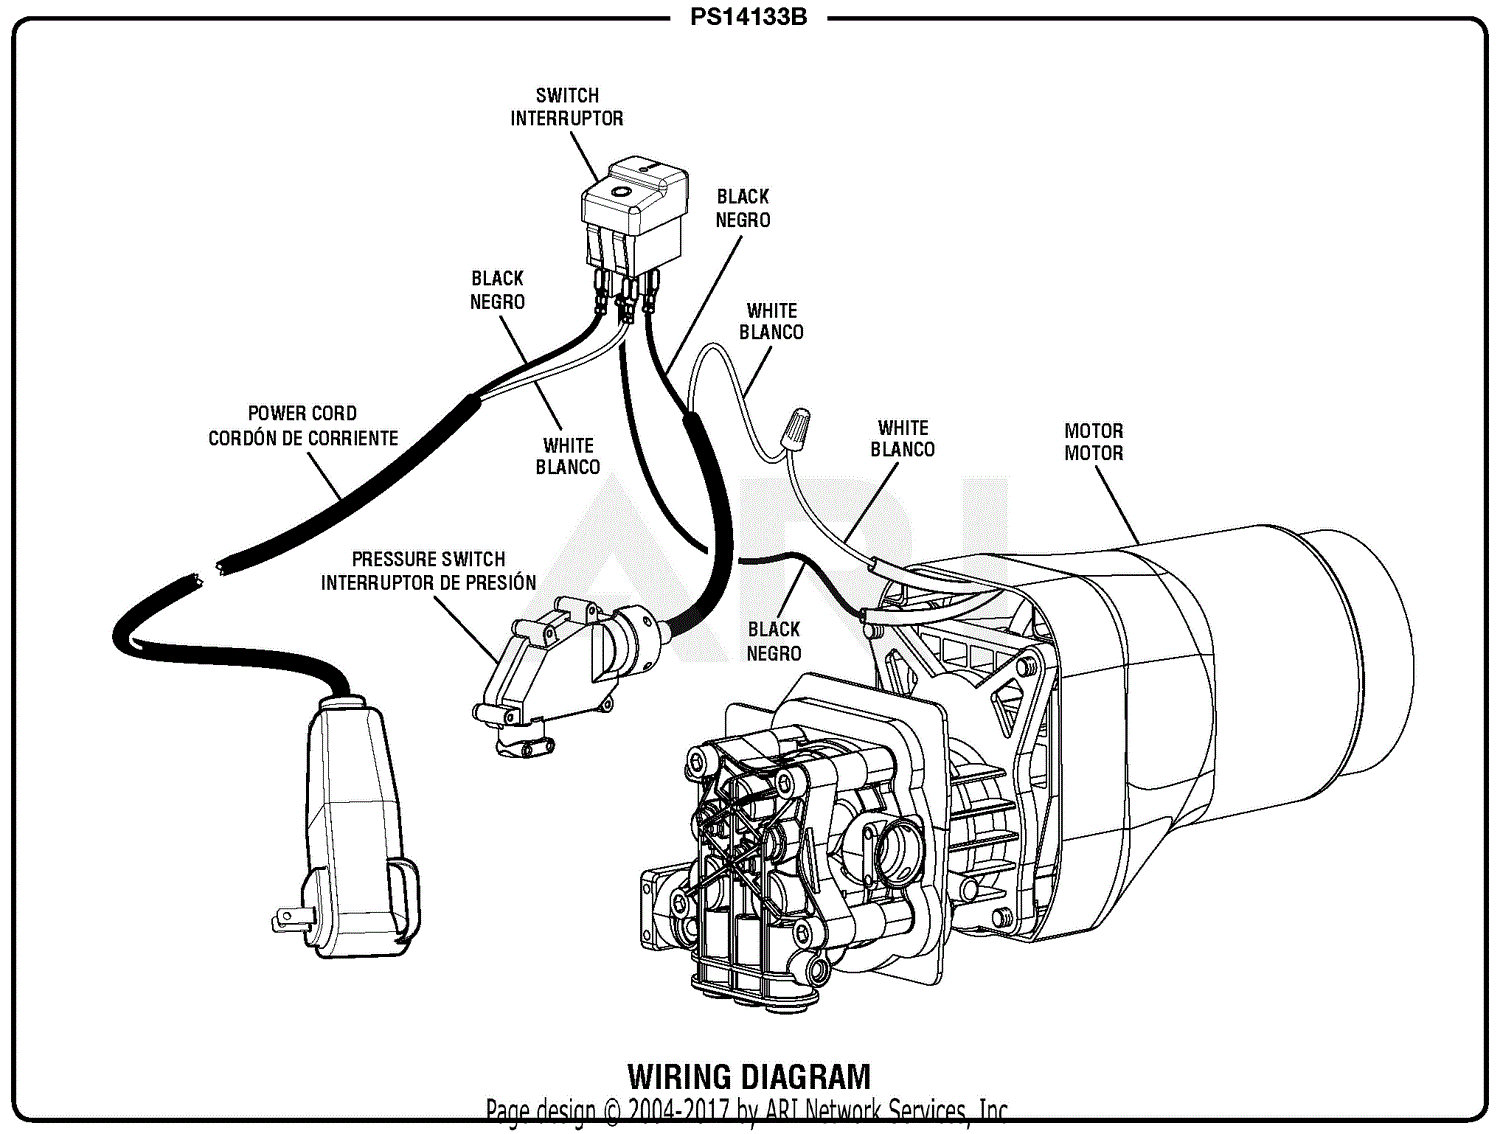 Autometer Oil Pressure Gauge Wiring Diagram from az417944.vo.msecnd.net